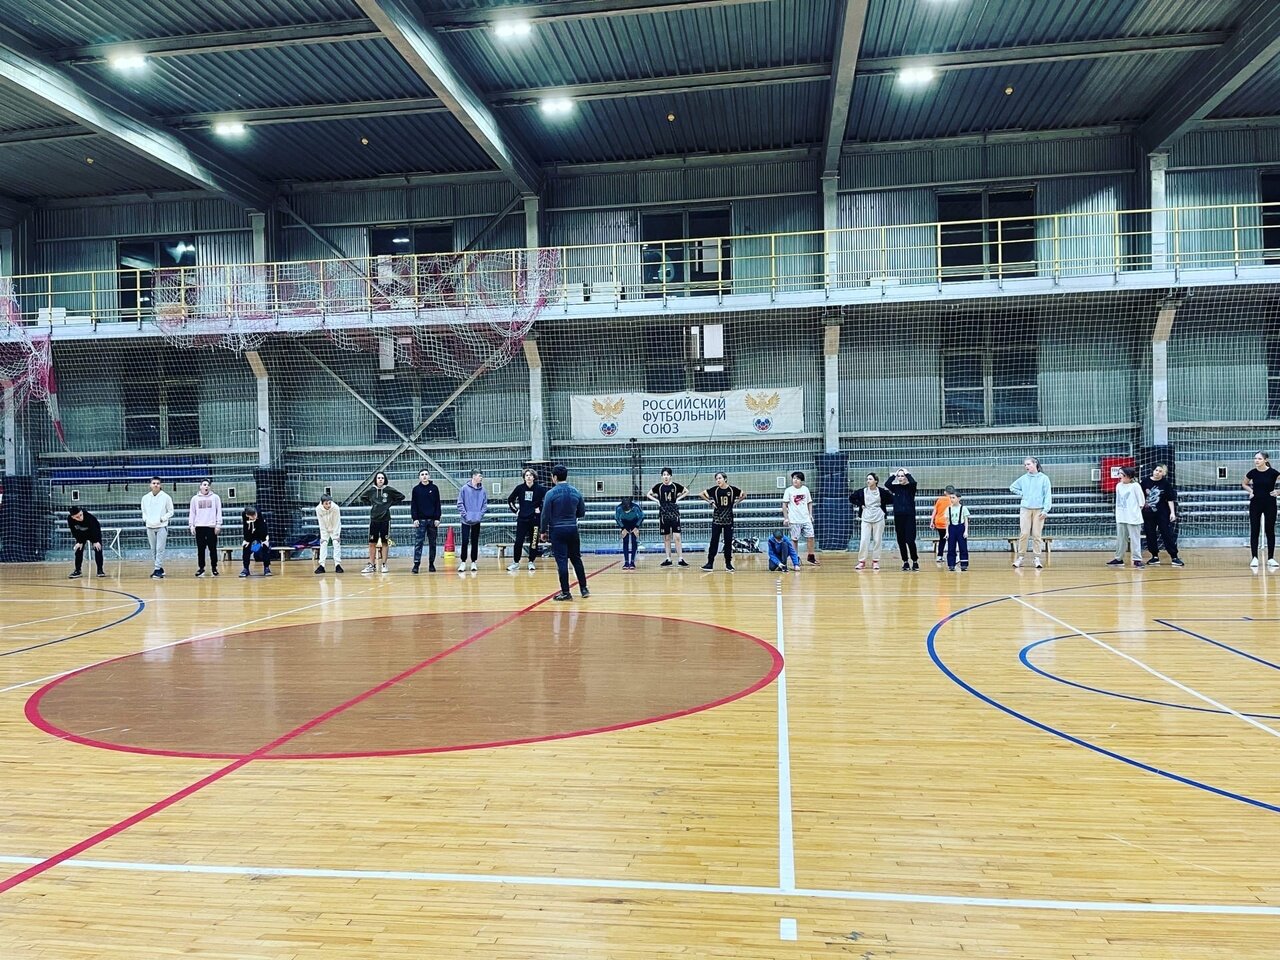 Школа олимпийский уфа. Уроссы для баскетбола. Школьный баскетбольный зал Таджикистана.